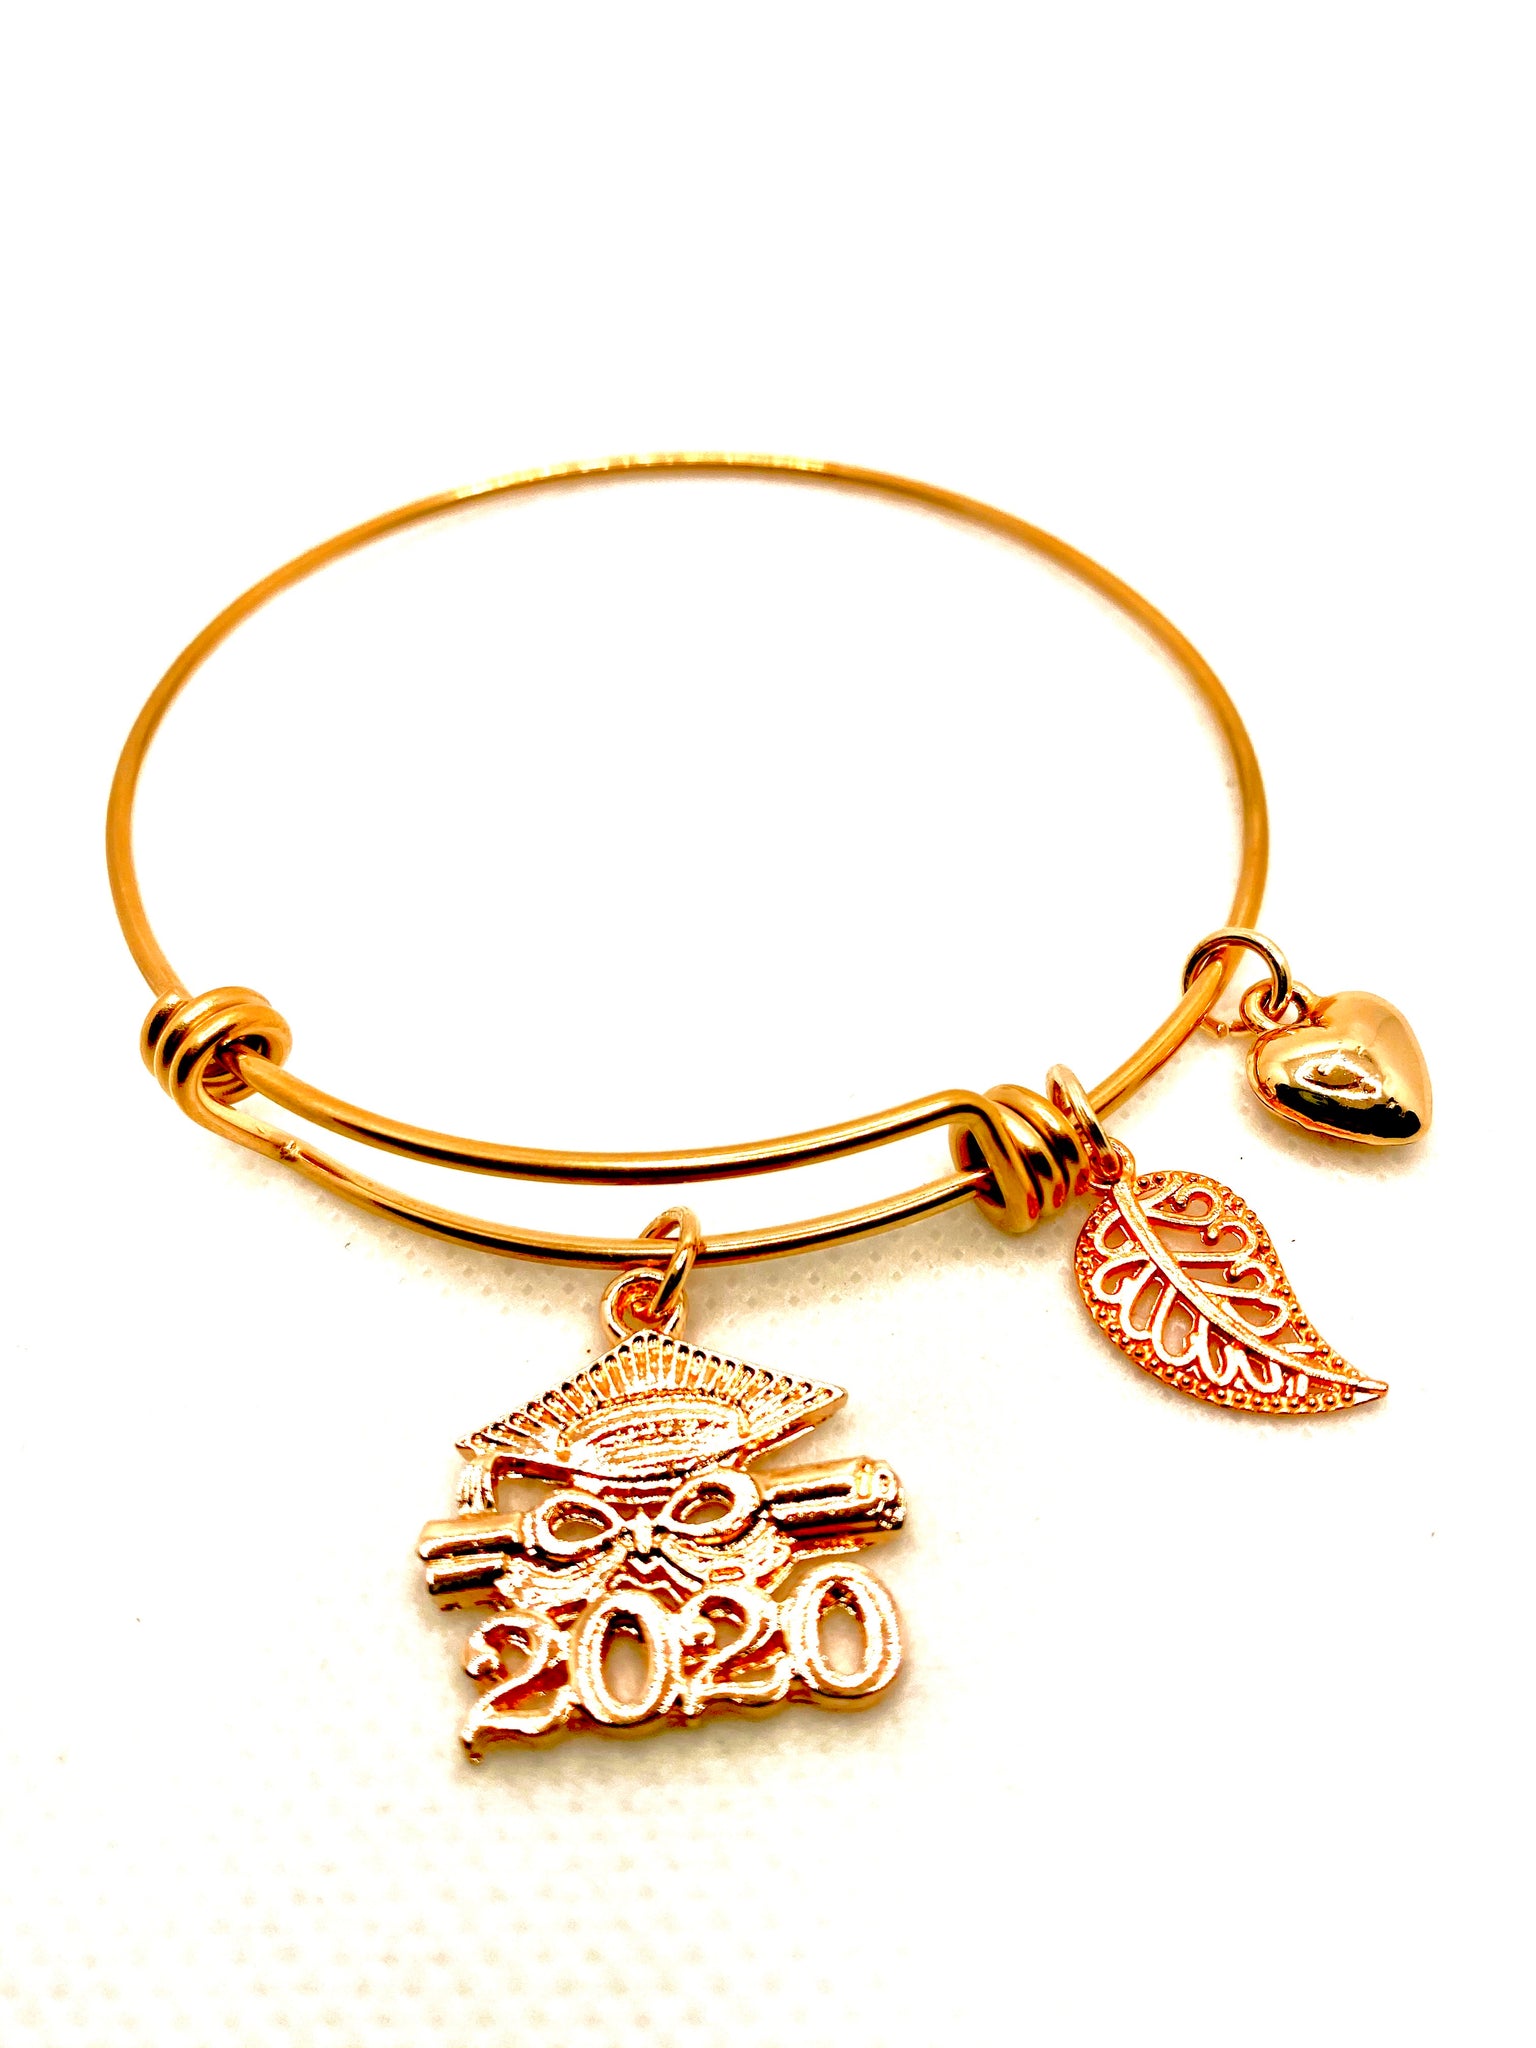 Rose Gold 2020 Graduation Bangle Bracelet